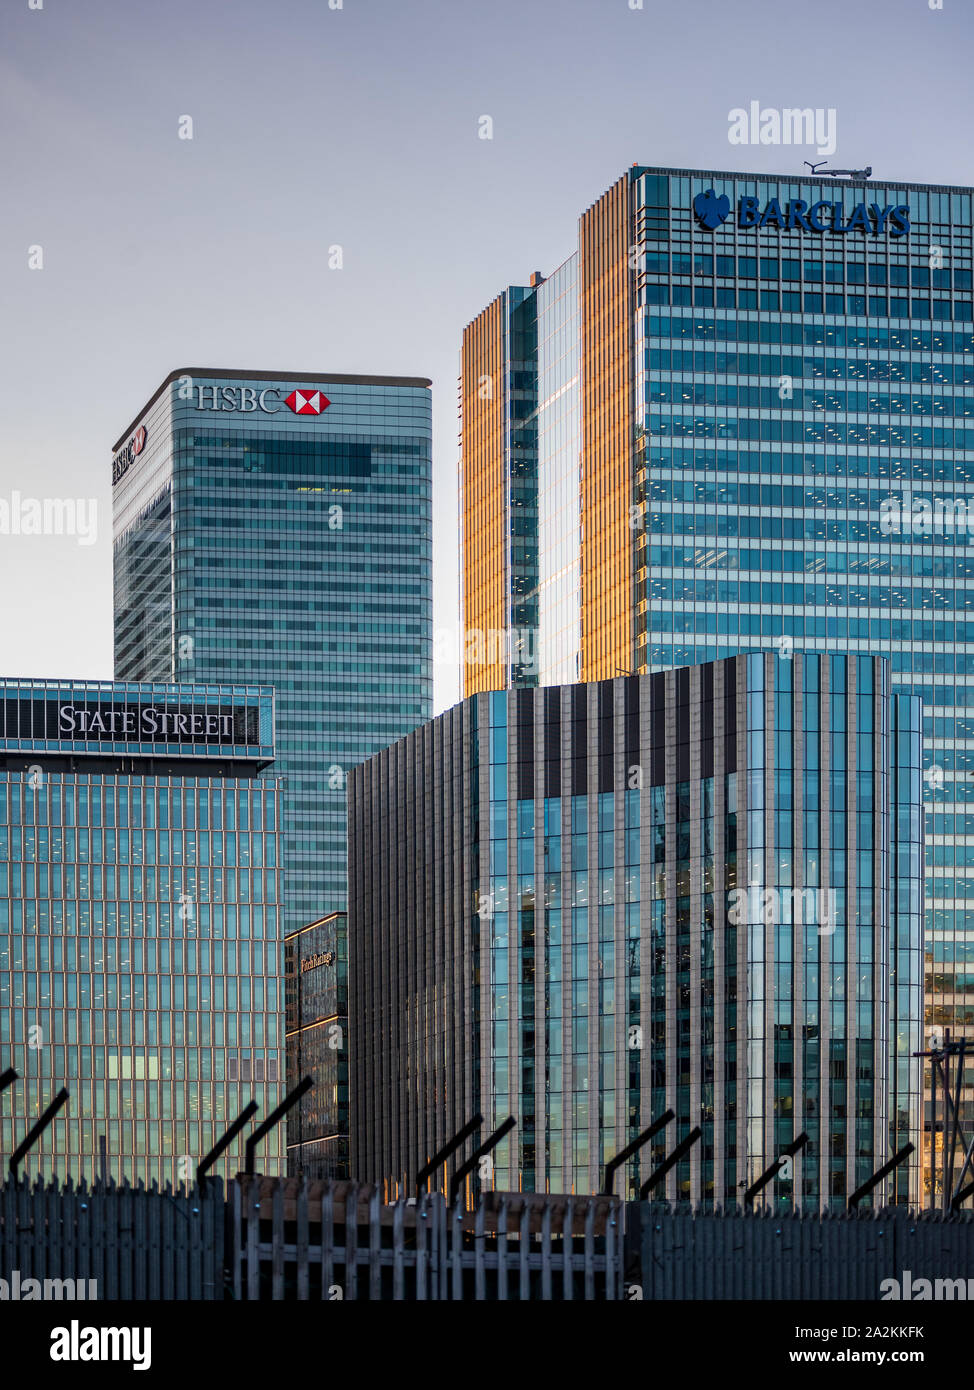 London Banks Canary Wharf - Financial Services Towers erscheinen hinter Stacheldrahtzäunen in der Canary Wharf Development London. Barclays HQ. HSBC HAUPTSITZ. Stockfoto